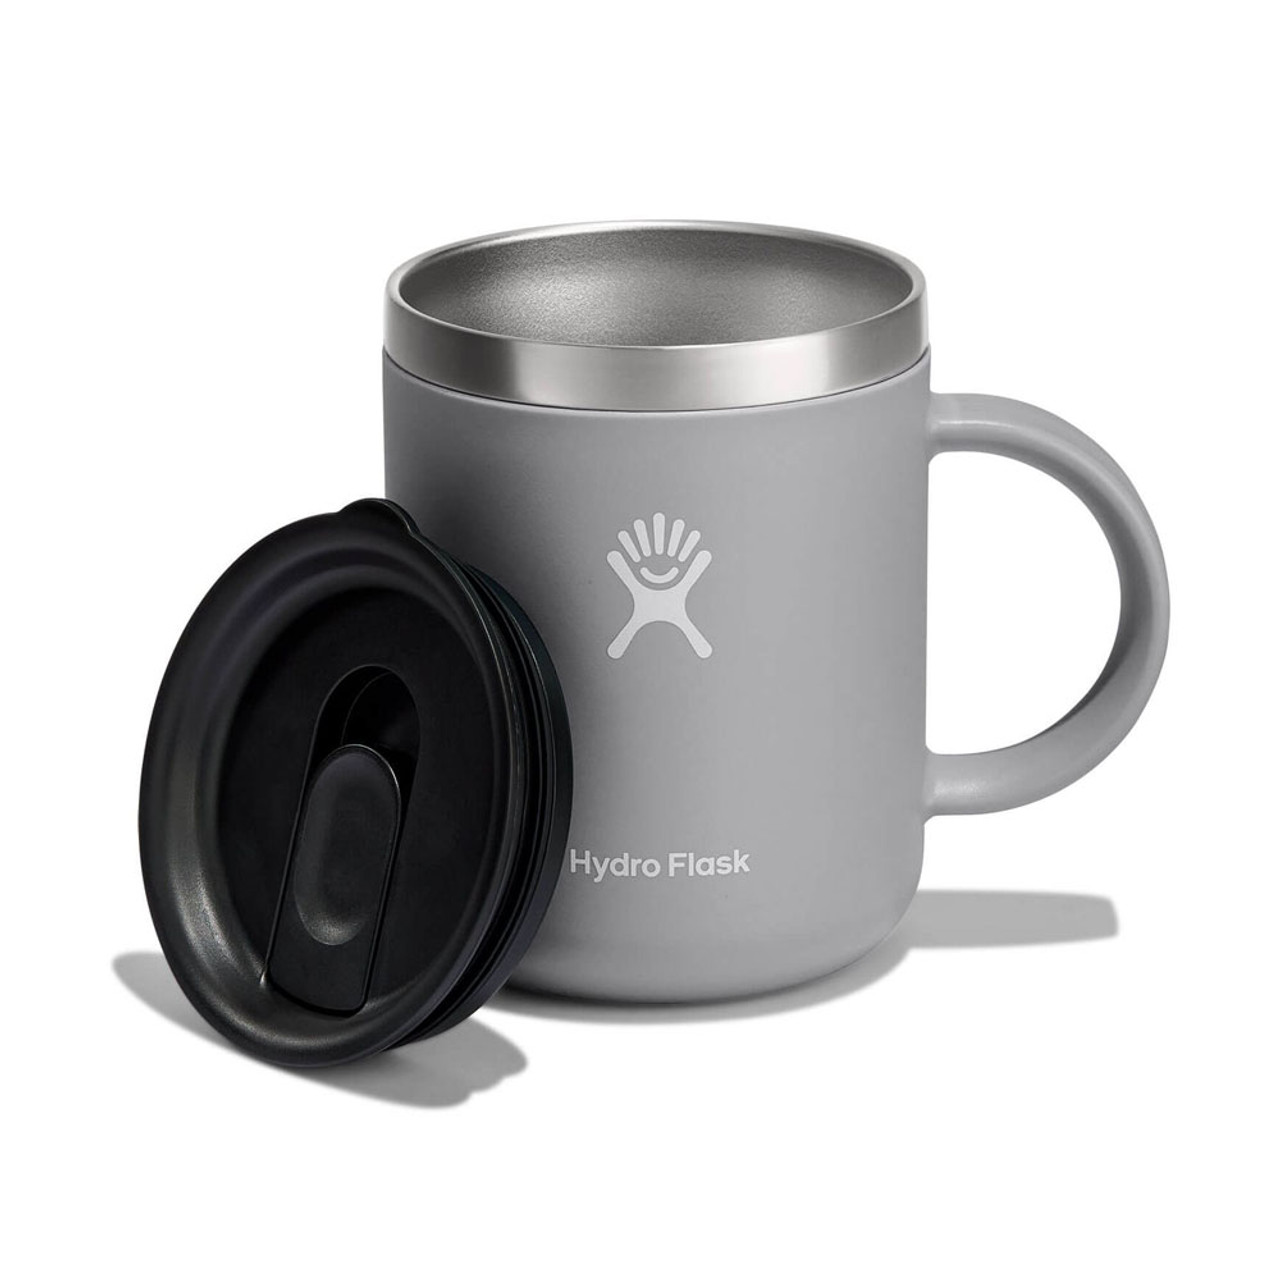 Hydro Flask 12 oz Coffee Mug (Berry)